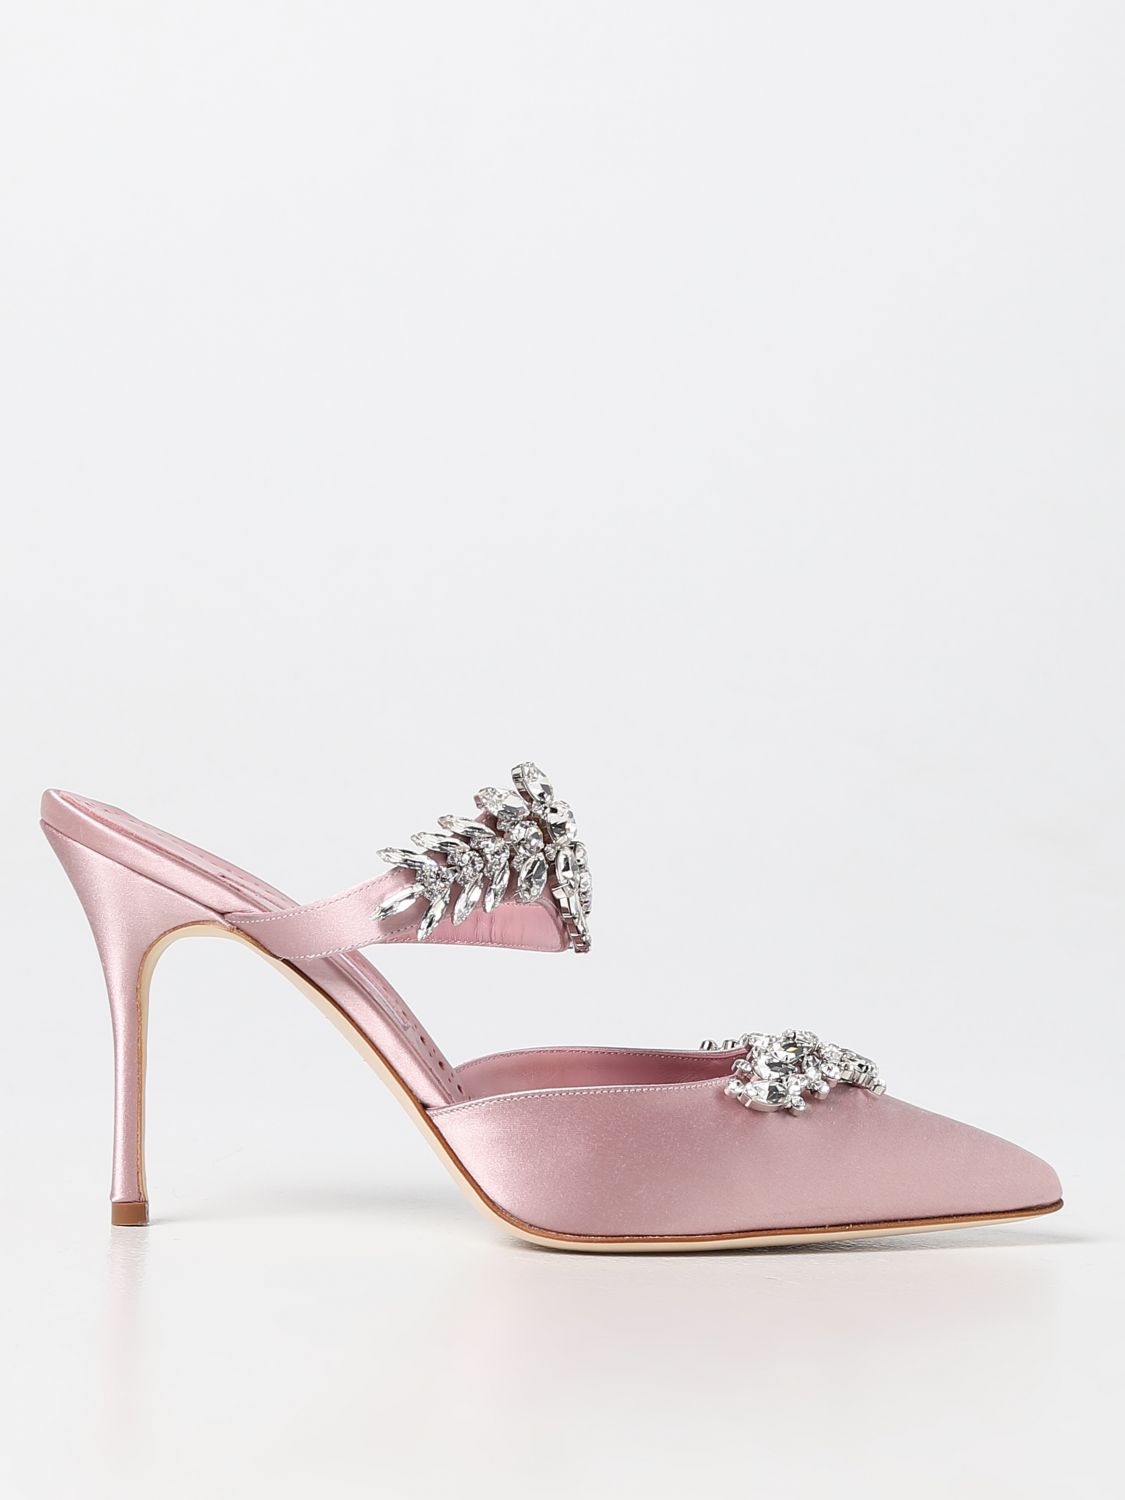 Manolo Blahnik High Heel Shoes Woman In Blush Pink | ModeSens